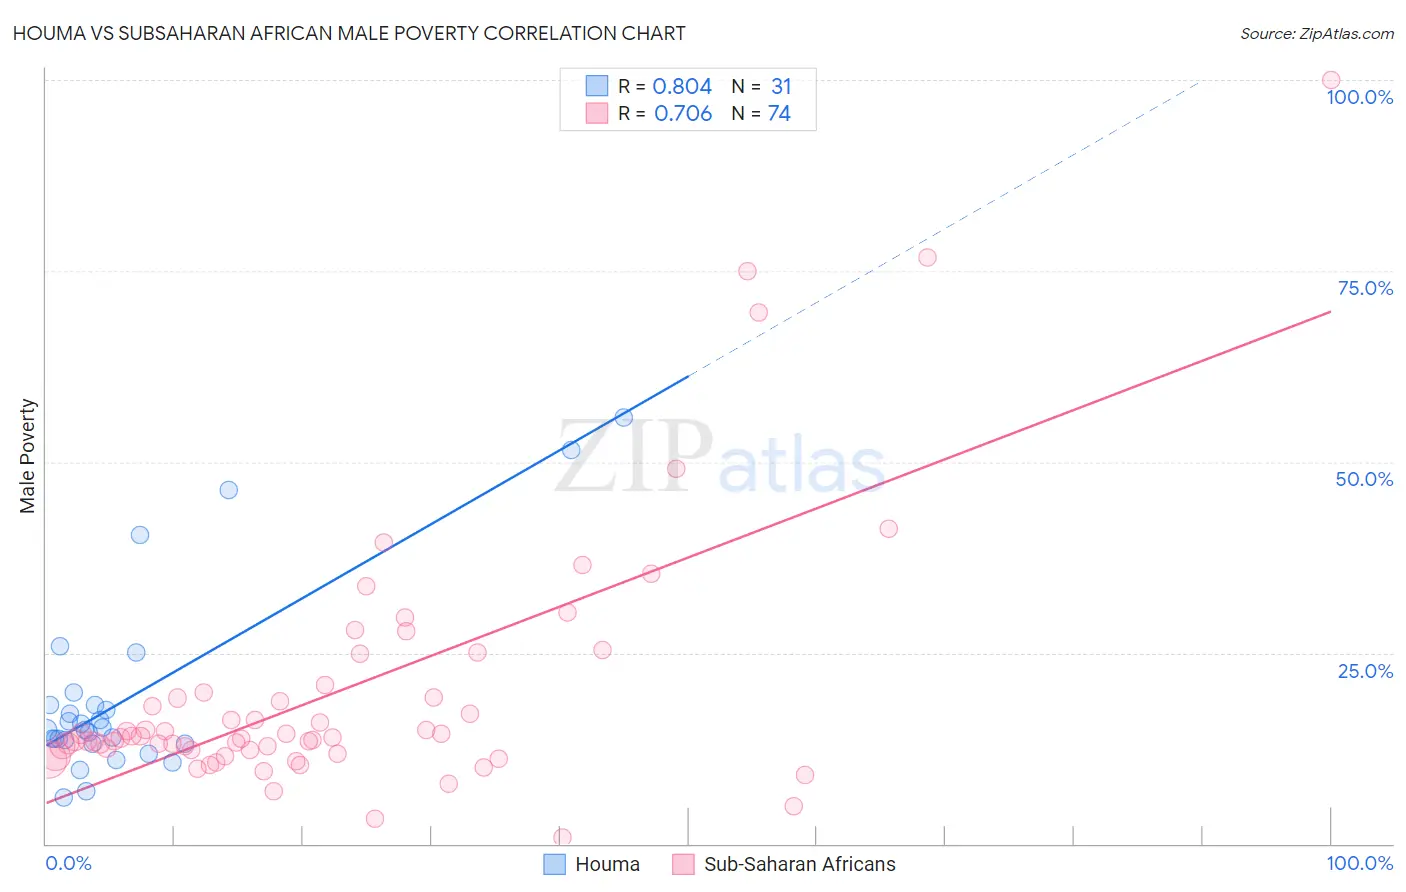 Houma vs Subsaharan African Male Poverty